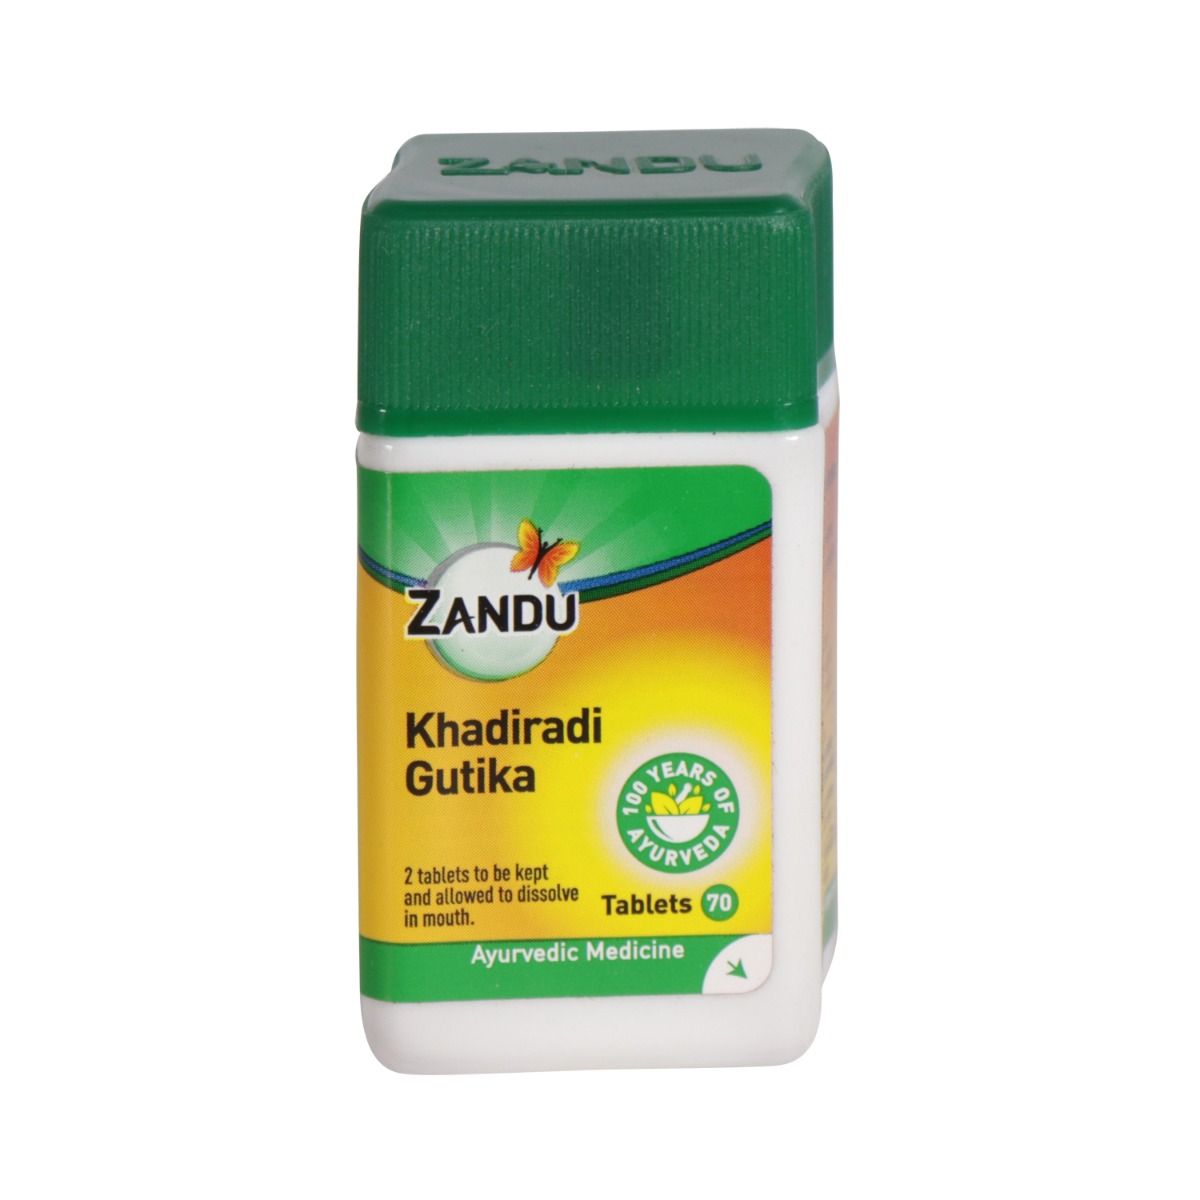 Picture of Zandu Khadiradi Gutika - 70 Tablets 